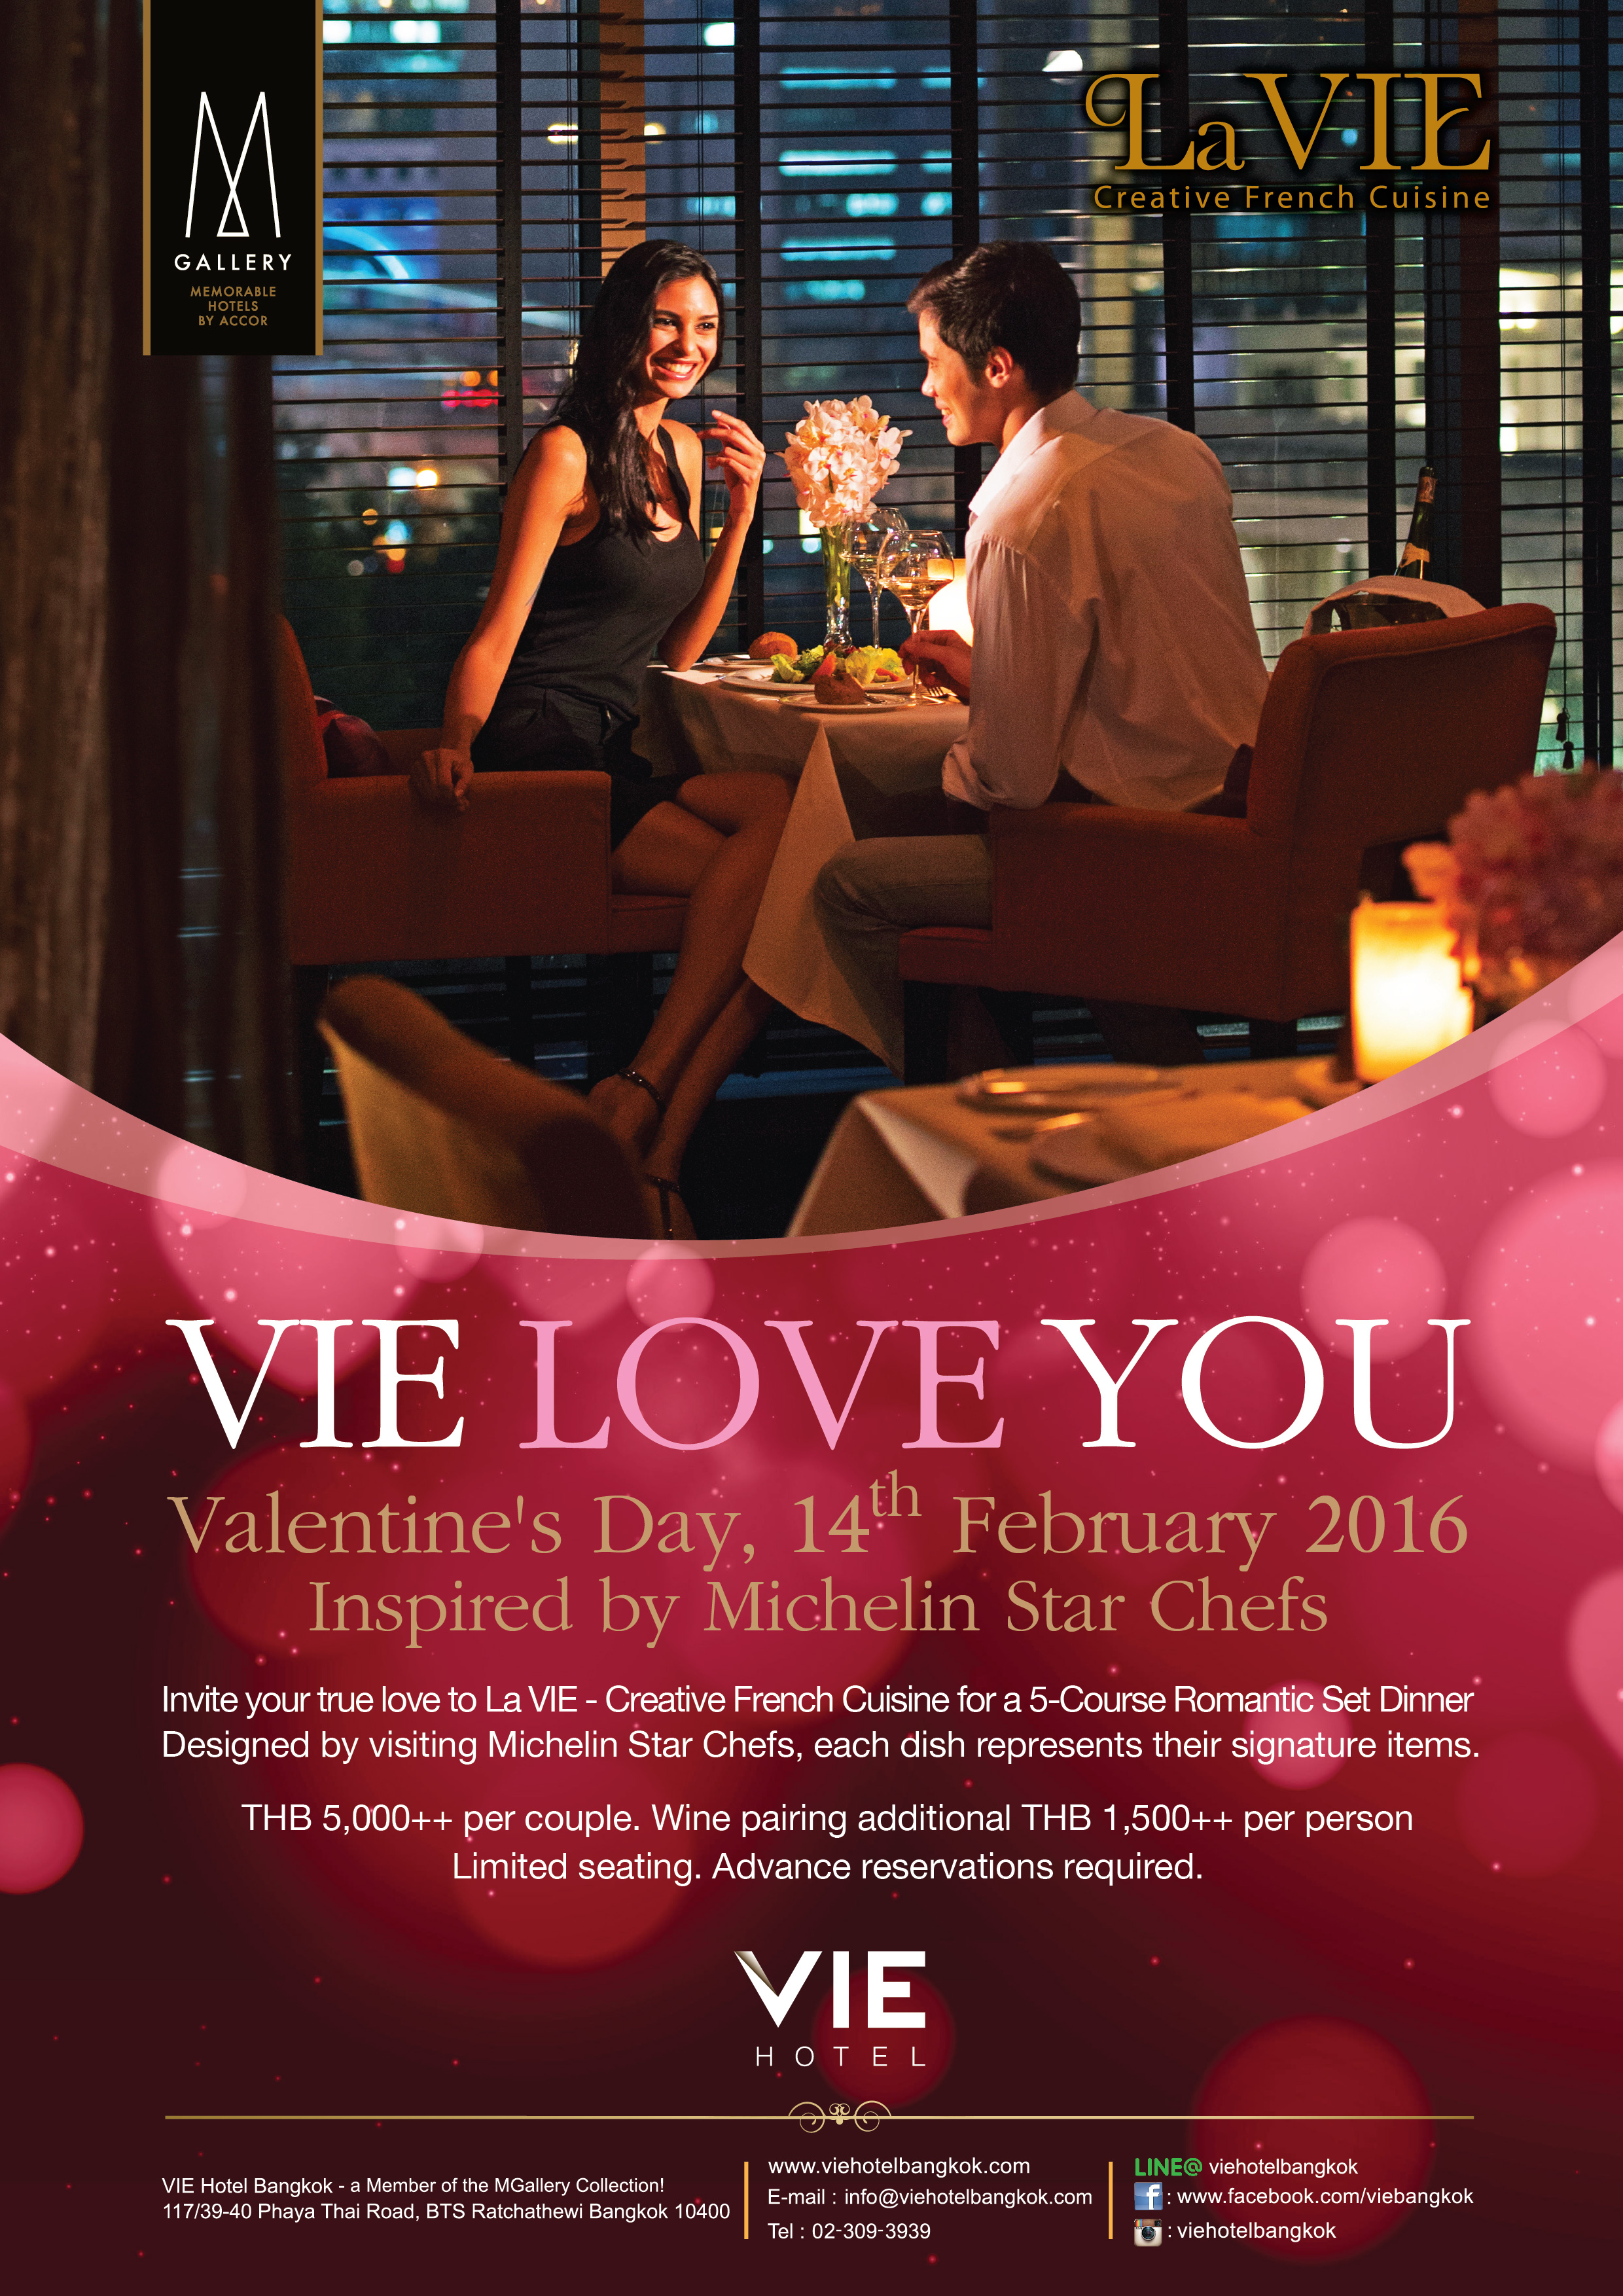 VIE LOVE YOU - Valentine's Set Dinner inspired by Michelin Star Chef